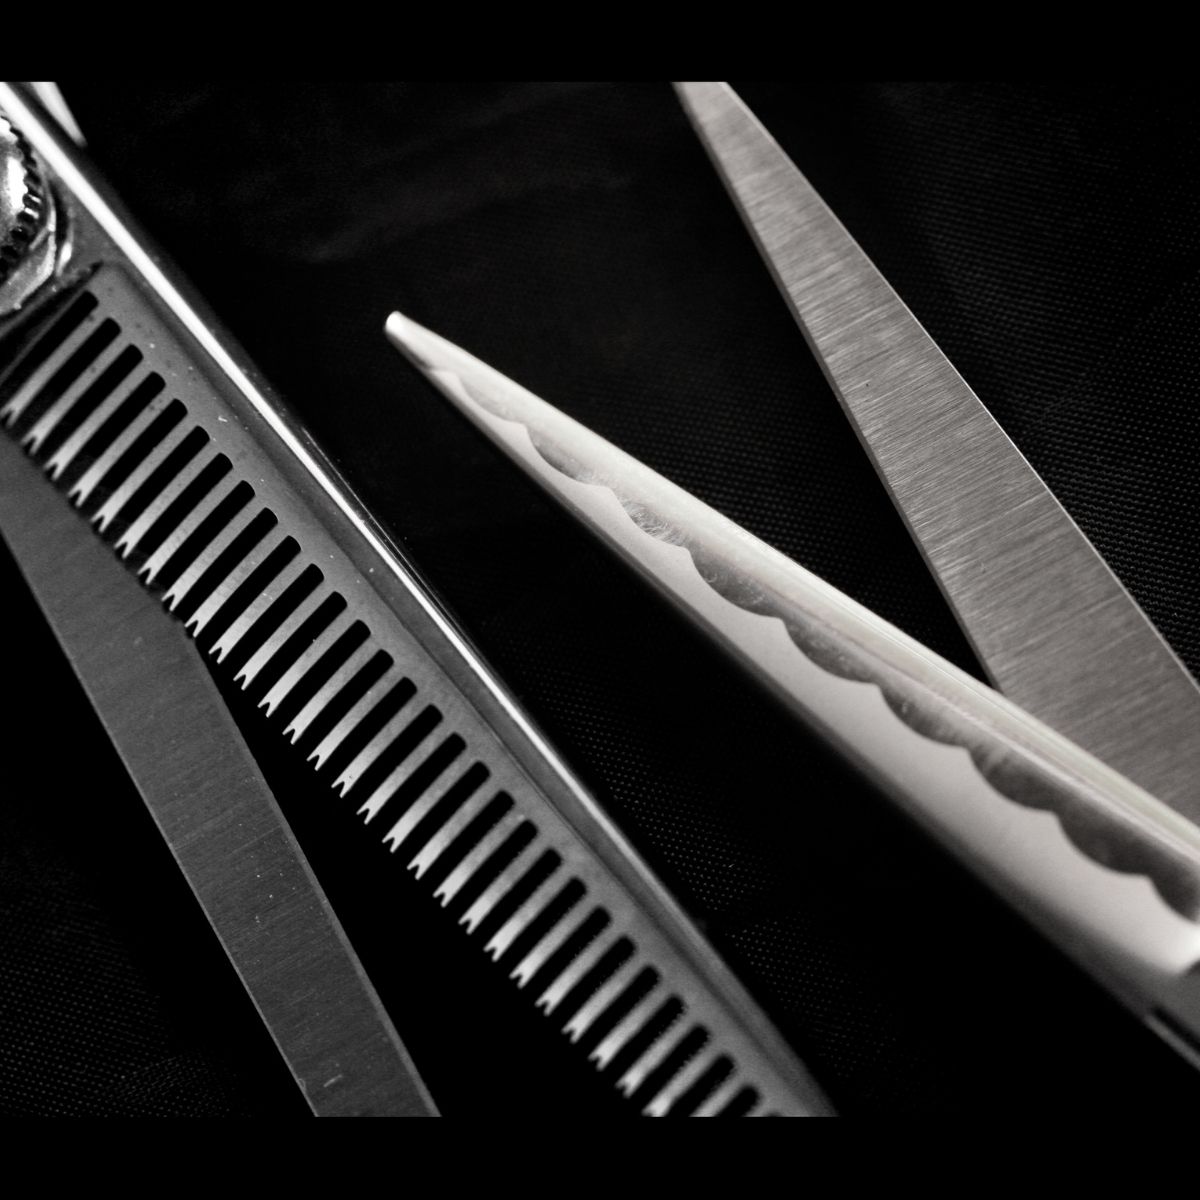 Convex edge hair scissor for slicing